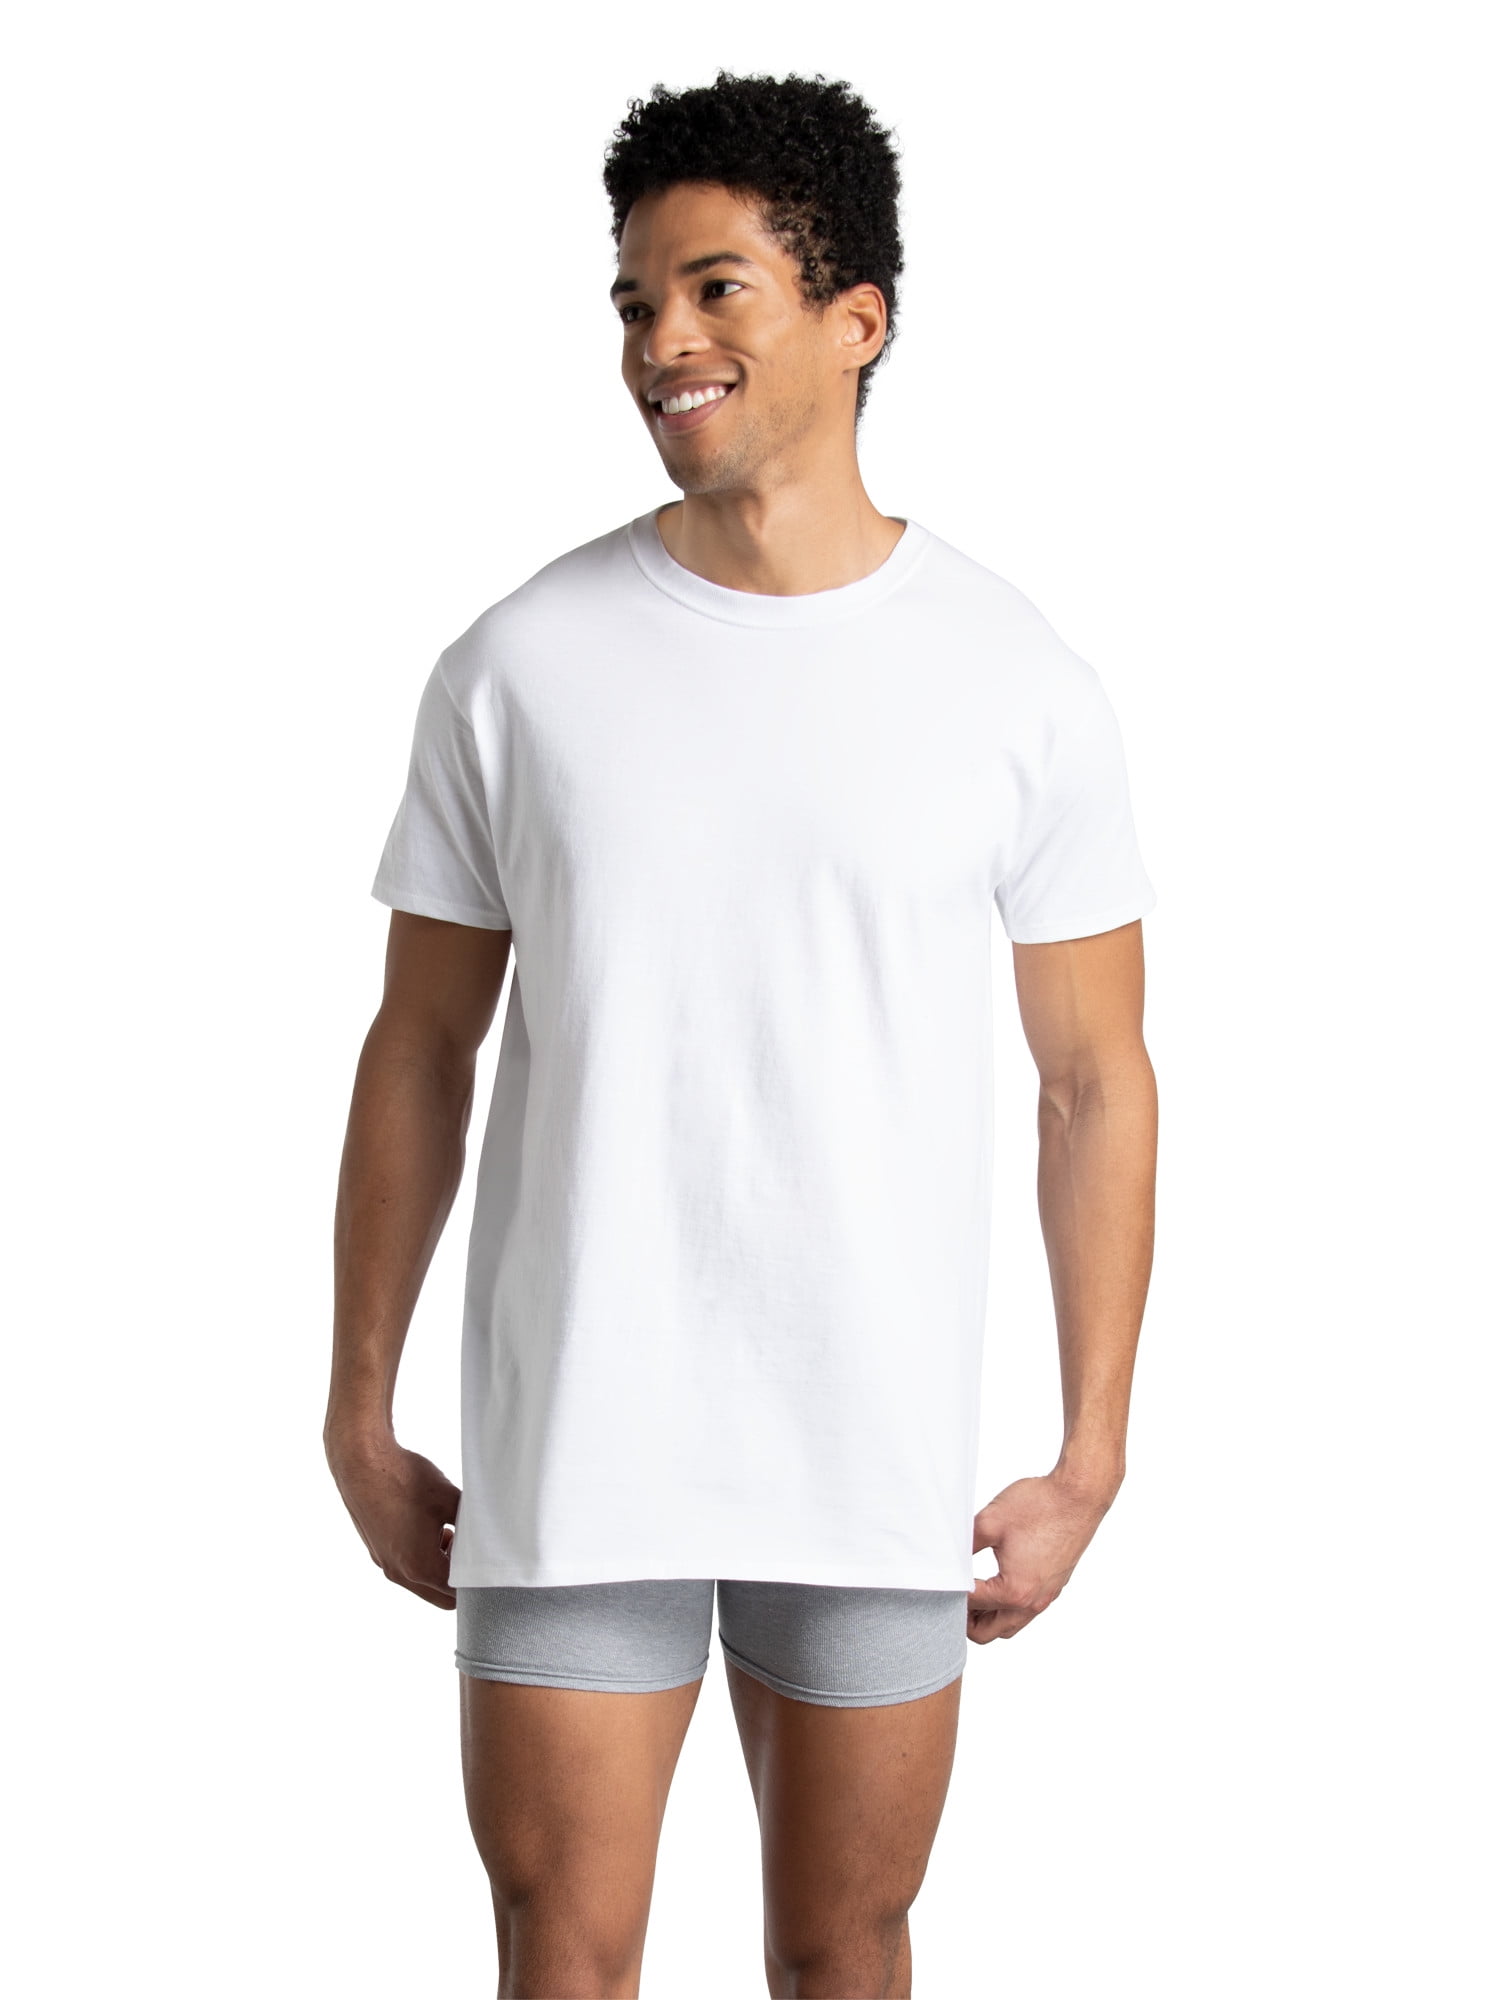 Fruit of the Men's CoolZone White Undershirts, Pack, Sizes S-XL - Walmart.com